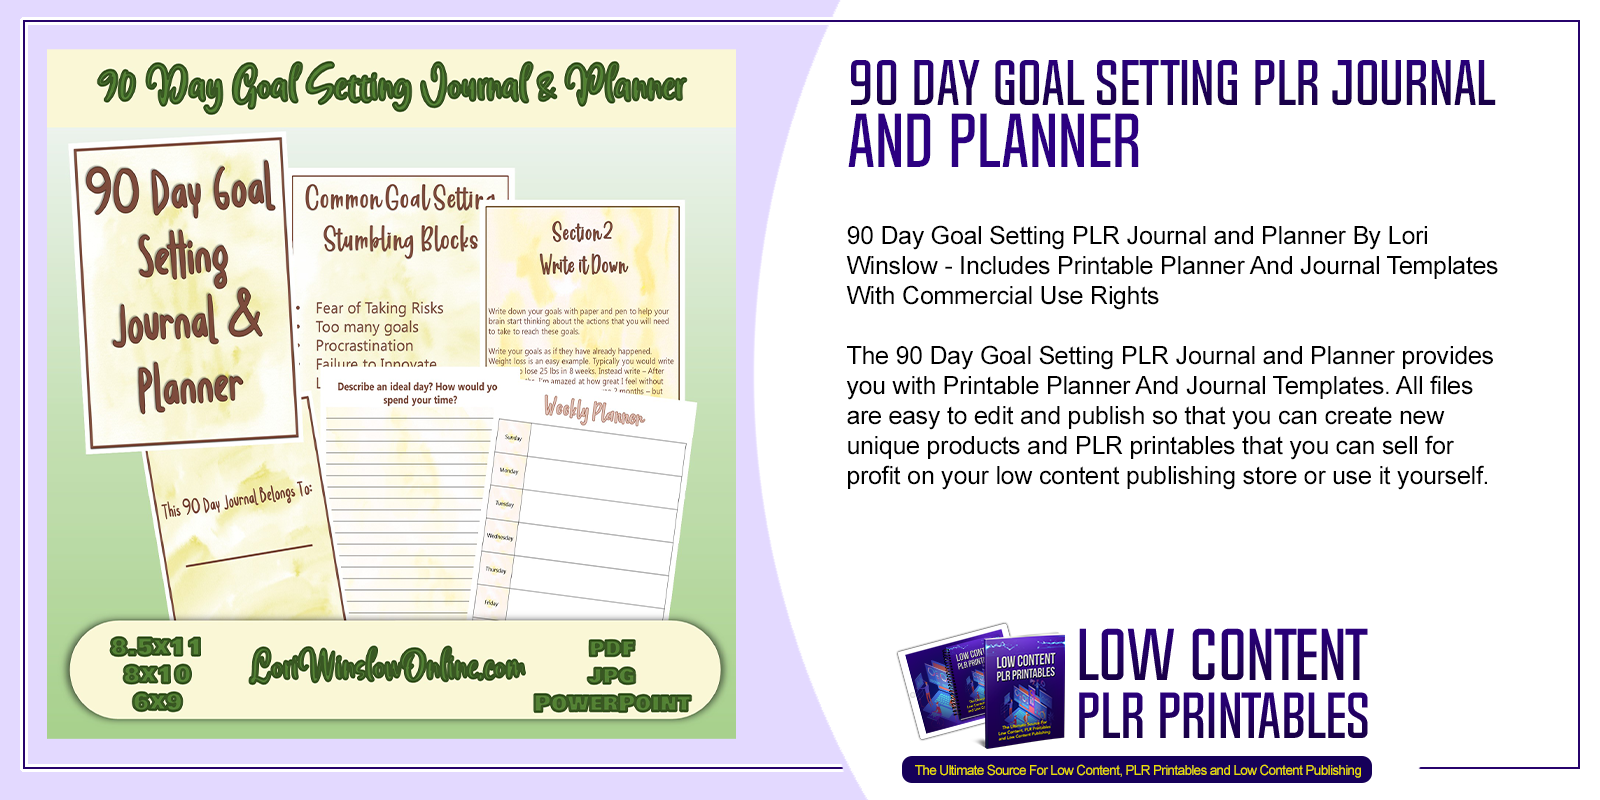 90 Day Goal Setting PLR Journal and Planner